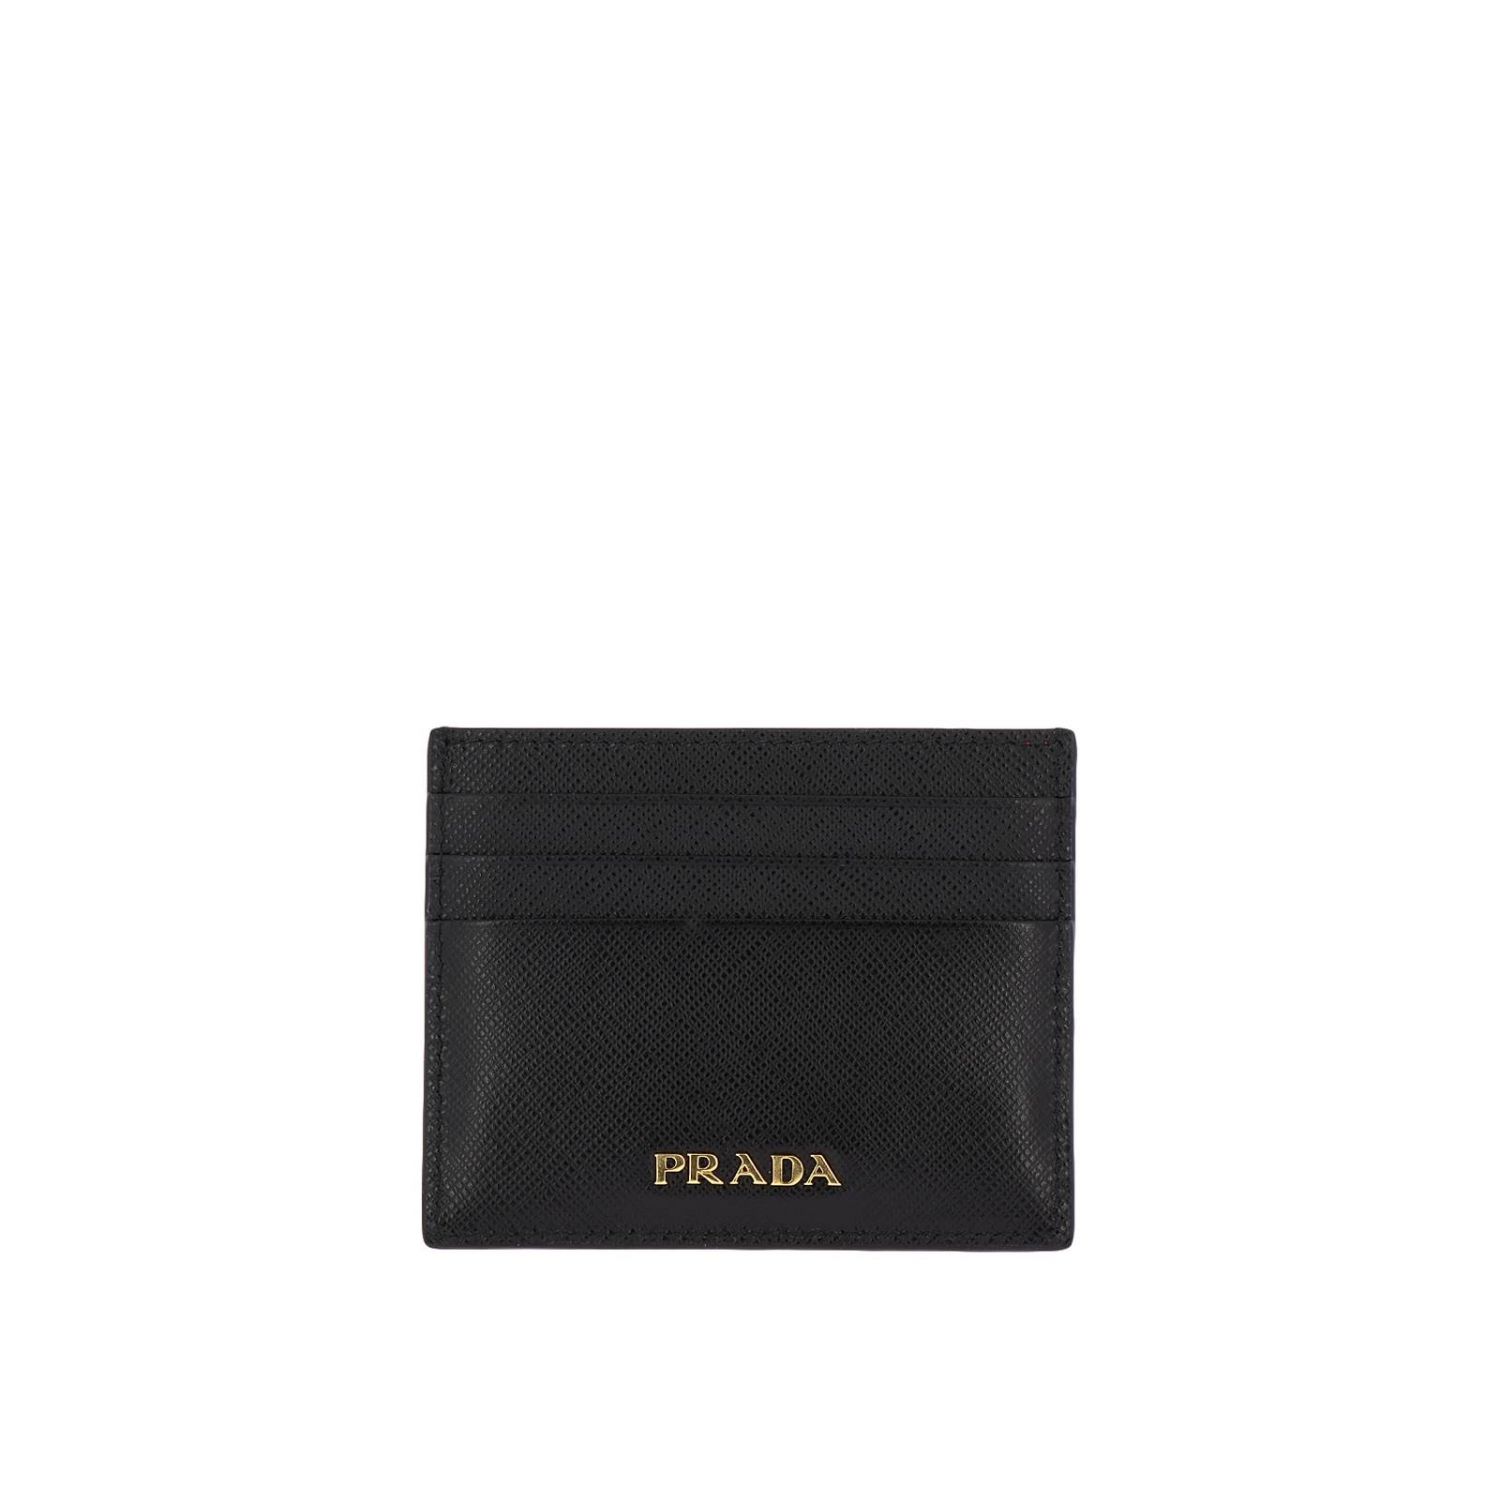 PRADA: Wallet women | Wallet Prada Women Black | Wallet Prada 1MC025 ...